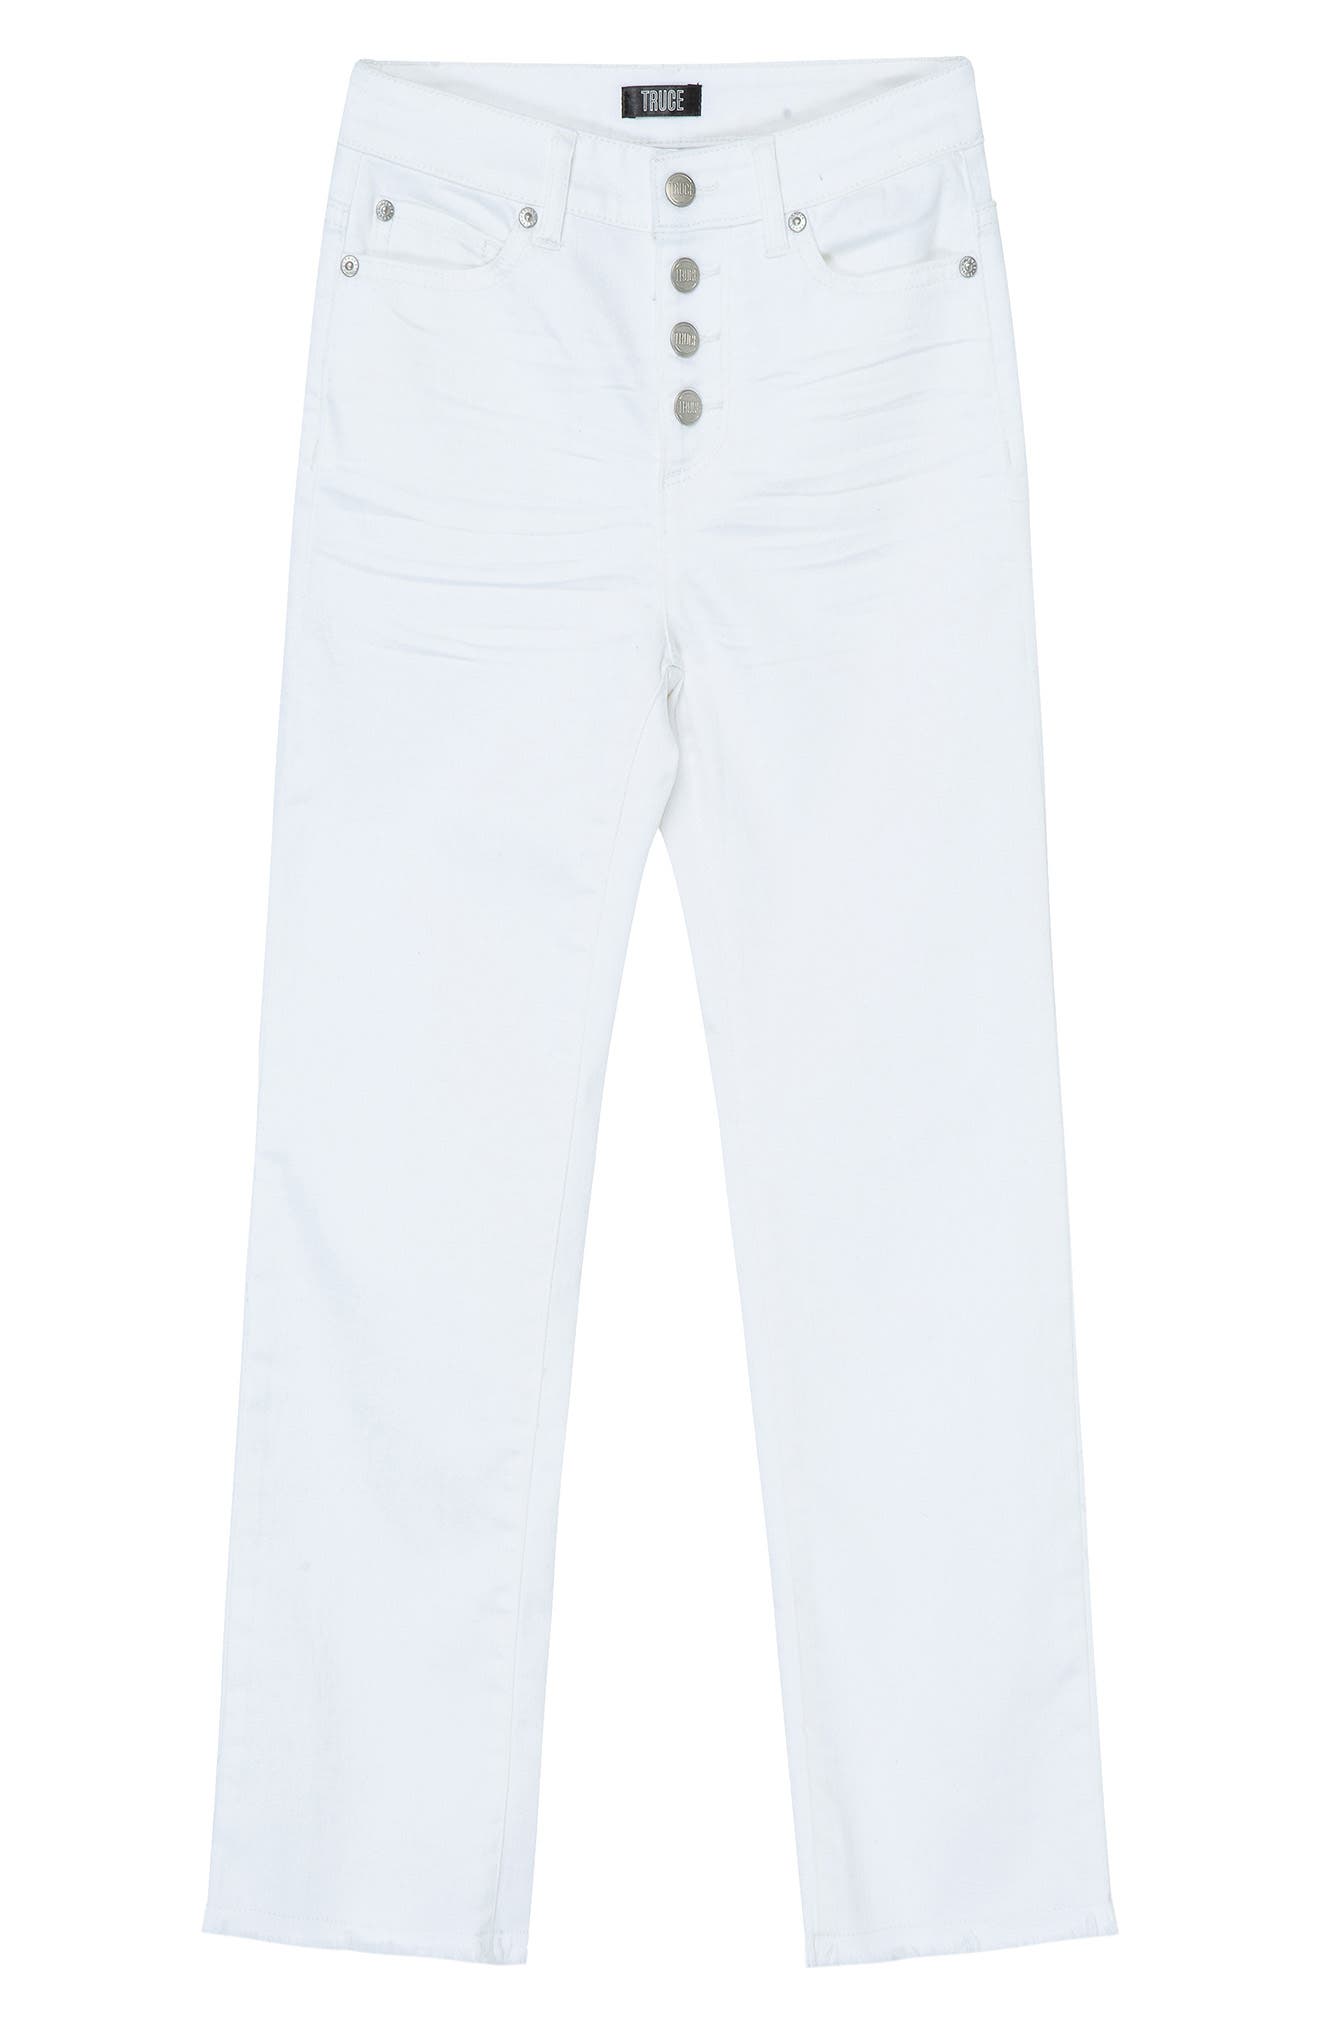 Pantalones BP Blanco 